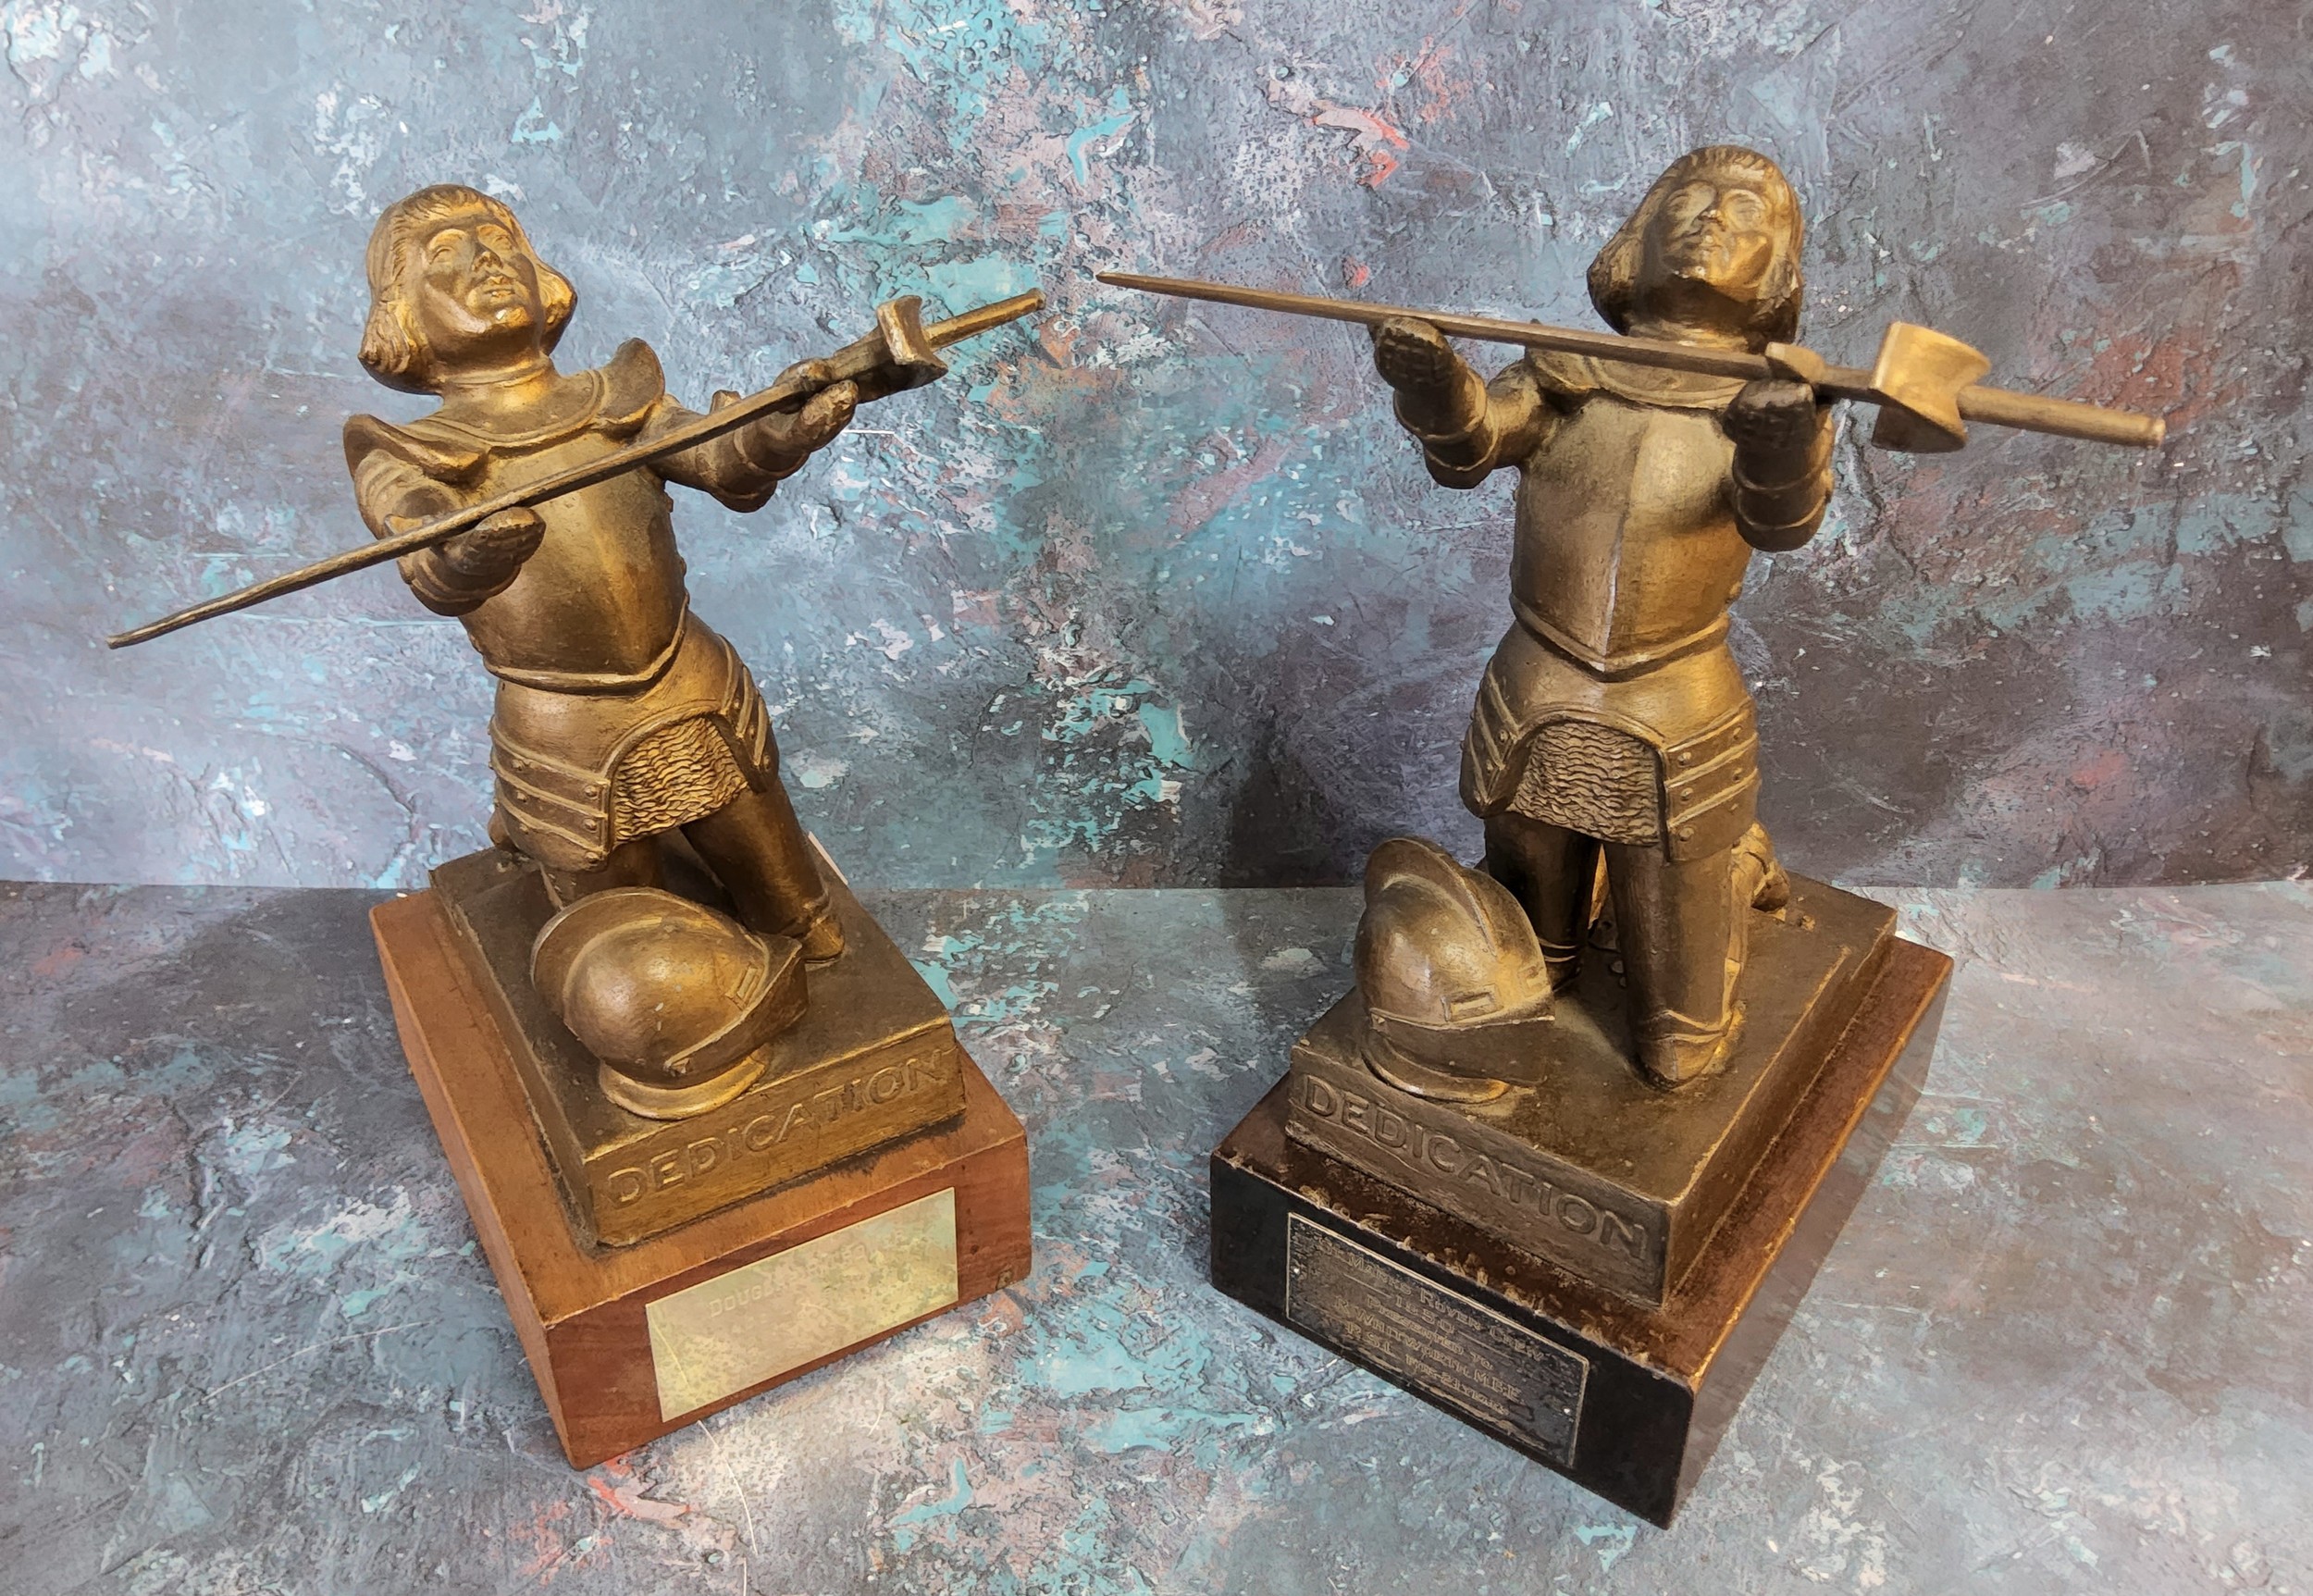 A near pair of Dedication figural trophies, holding a sword aloft on a wooden plinth base.